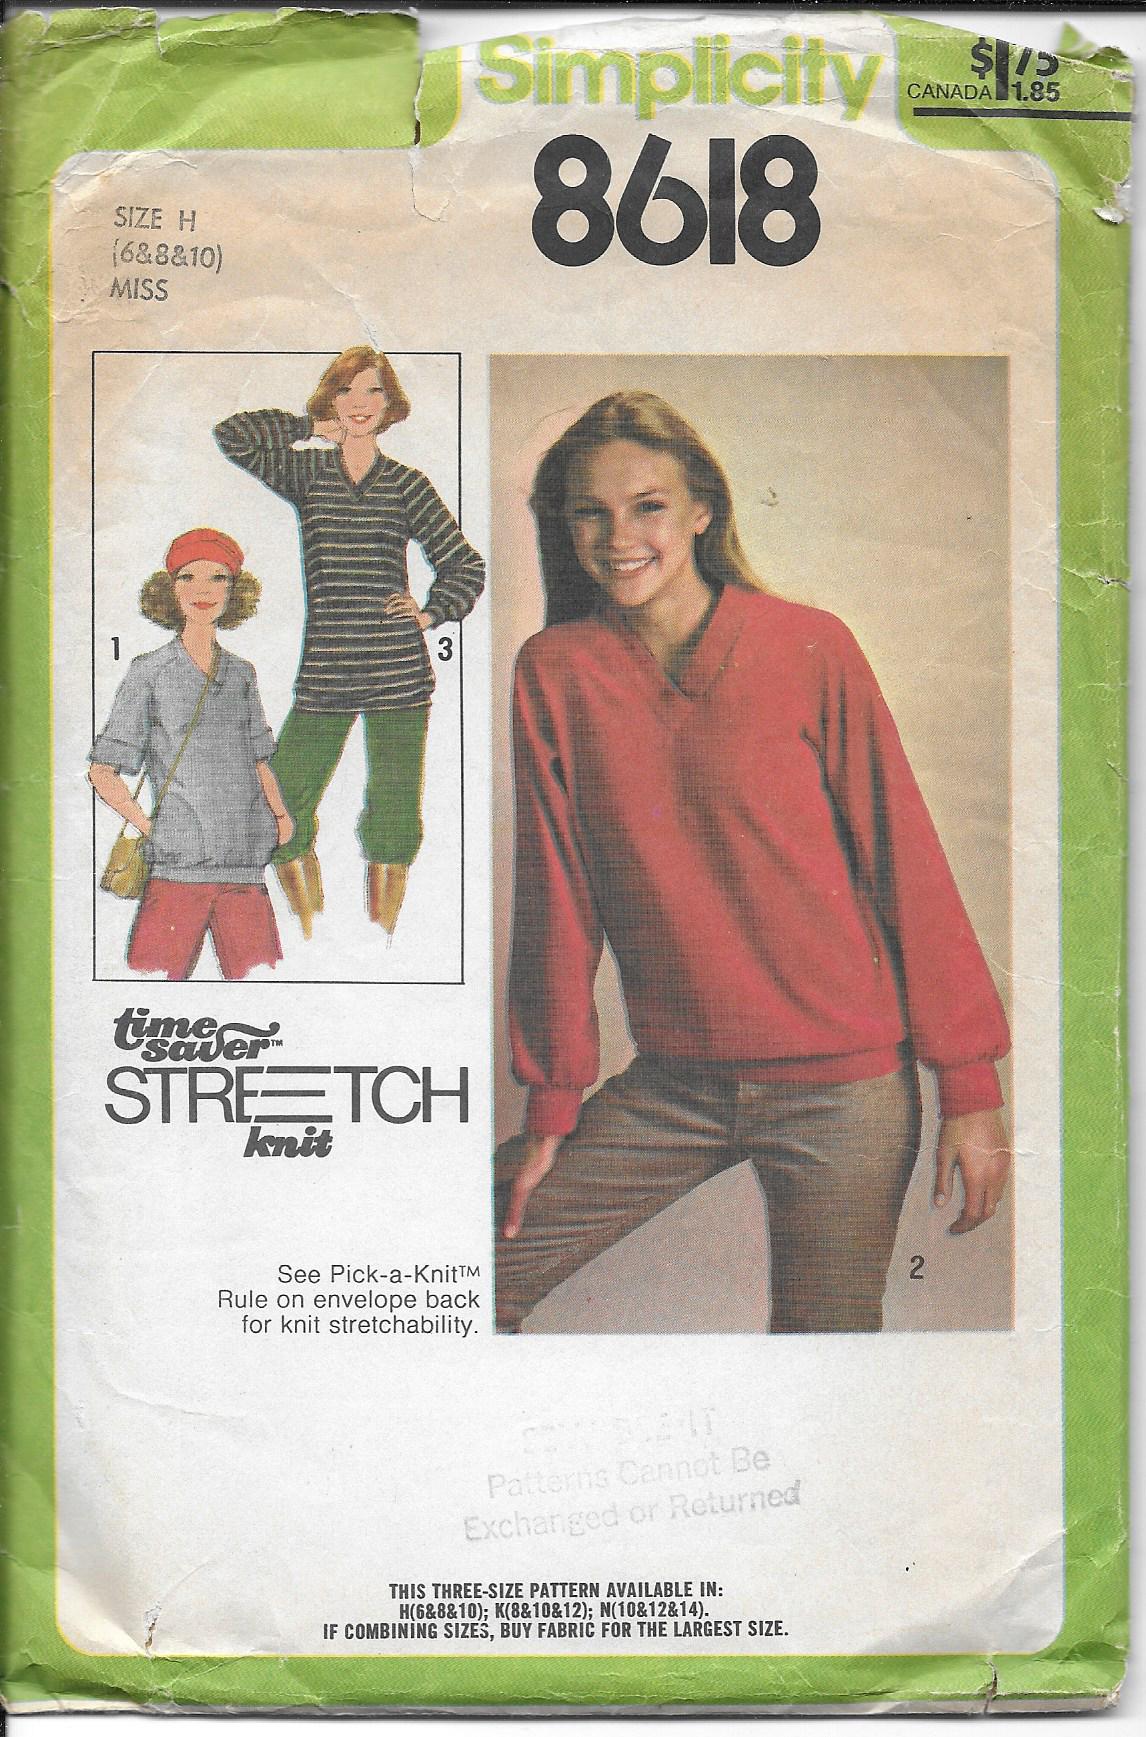 SALE 1978 Simplicity 8618 Pattern - Knit Top